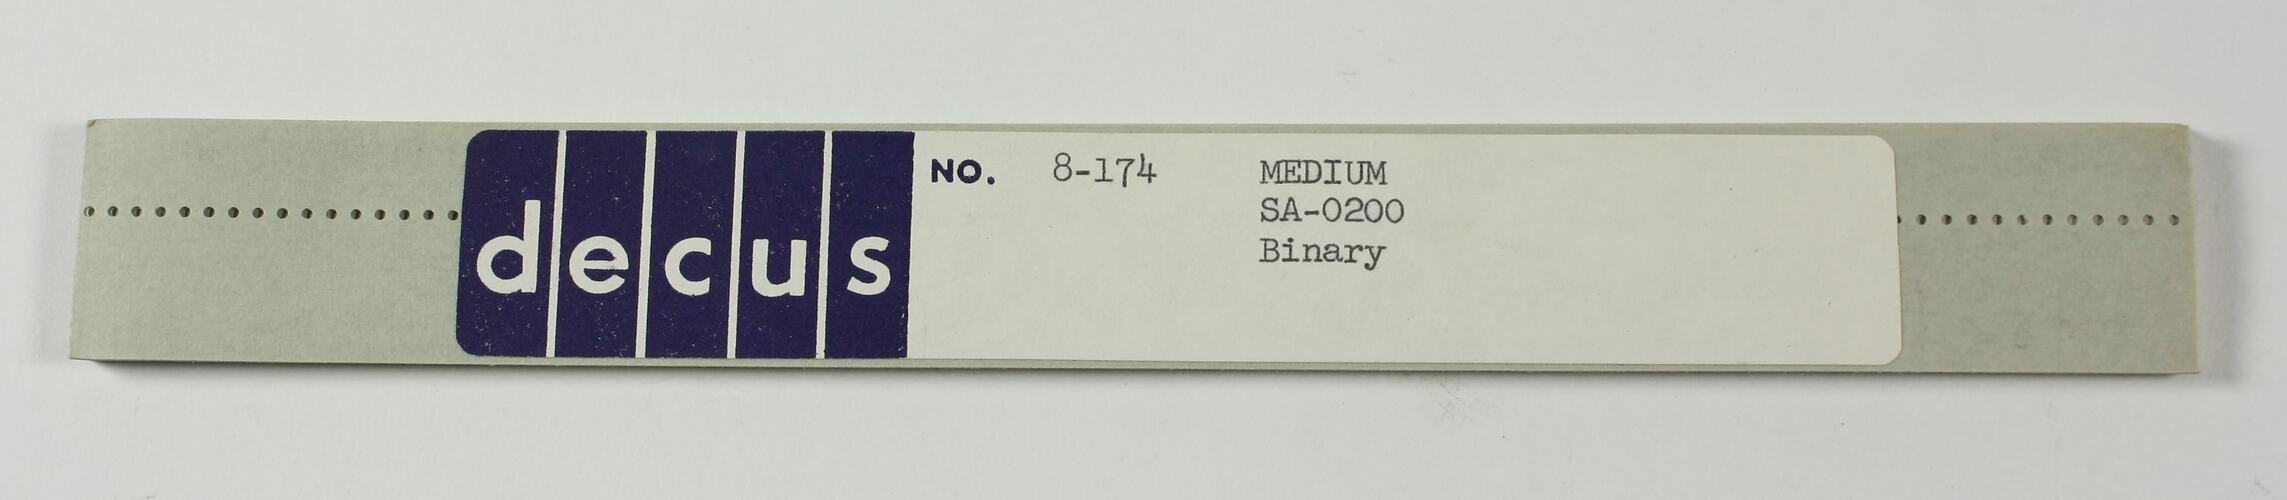 Paper Tape - DECUS, '8-174 Medium, SA-0200, Binary'